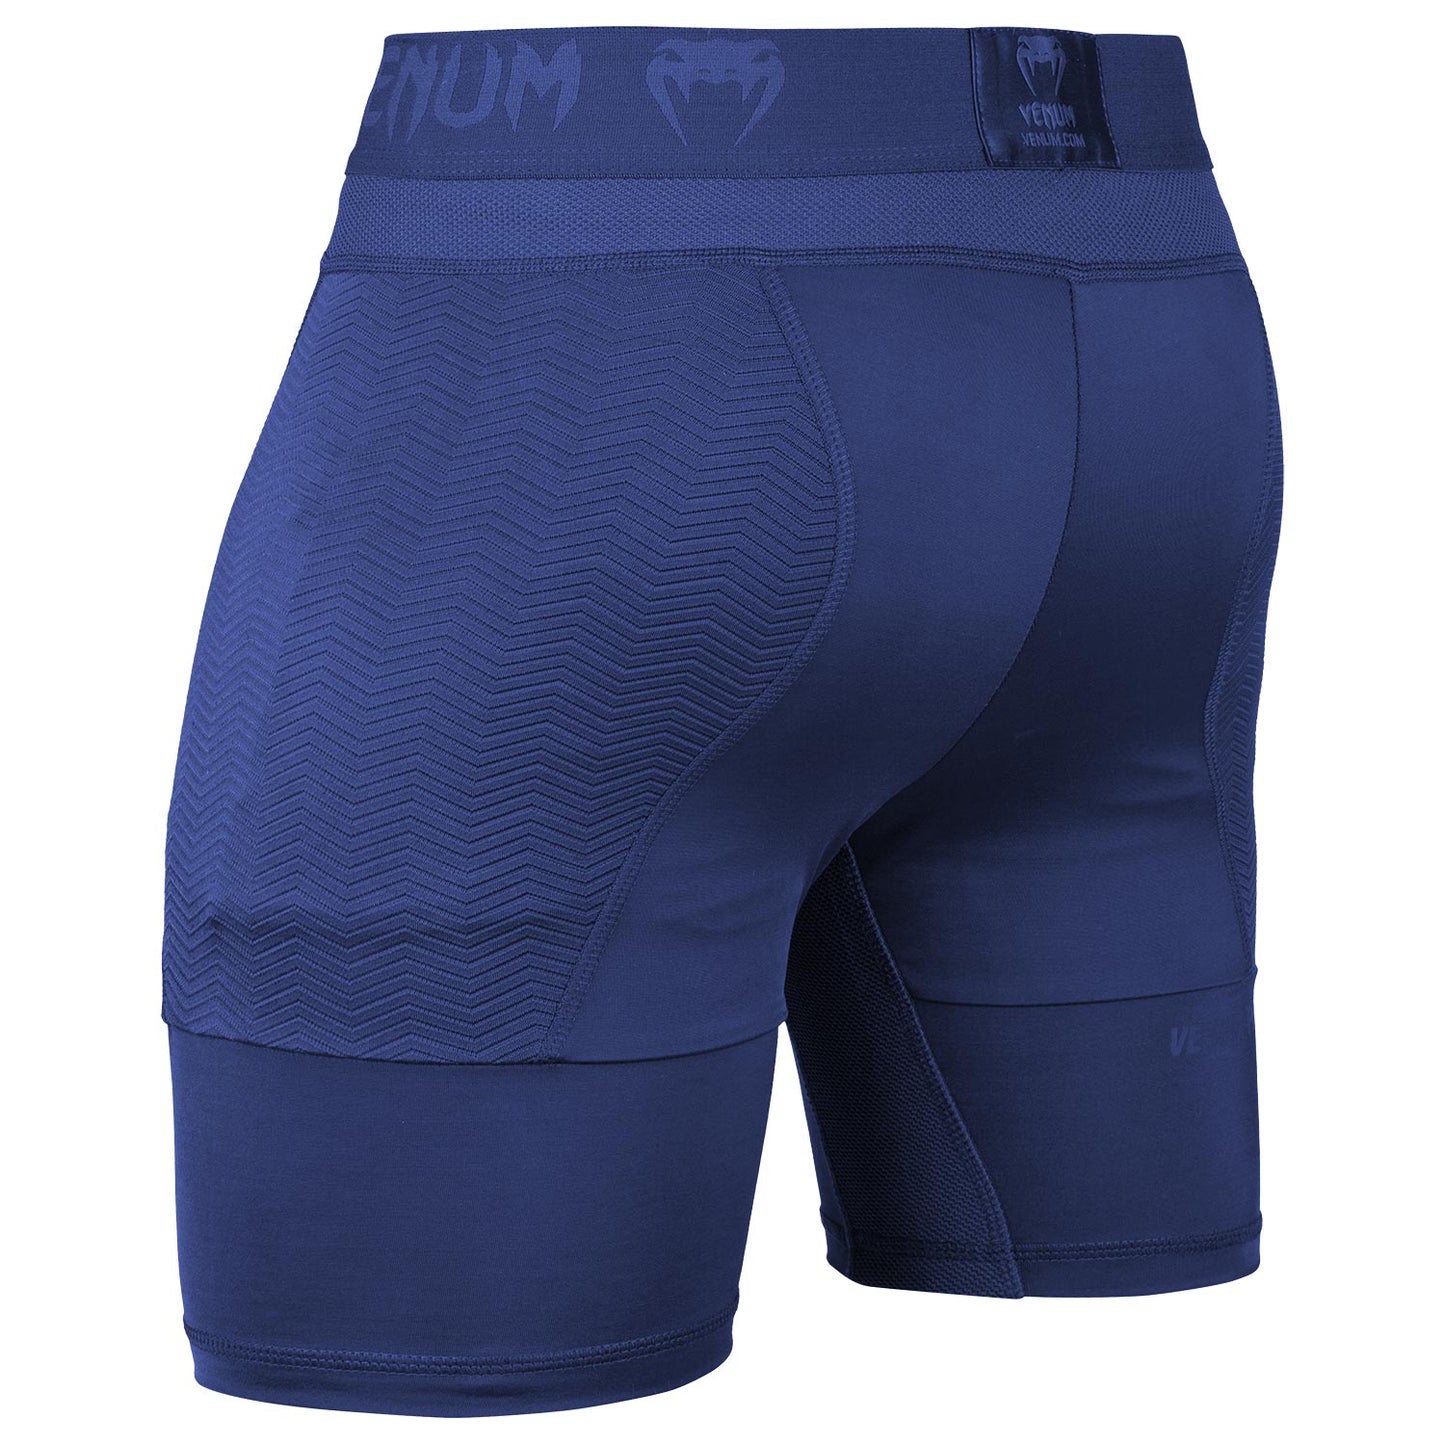 Venum G-Fit Compression Shorts - Navy